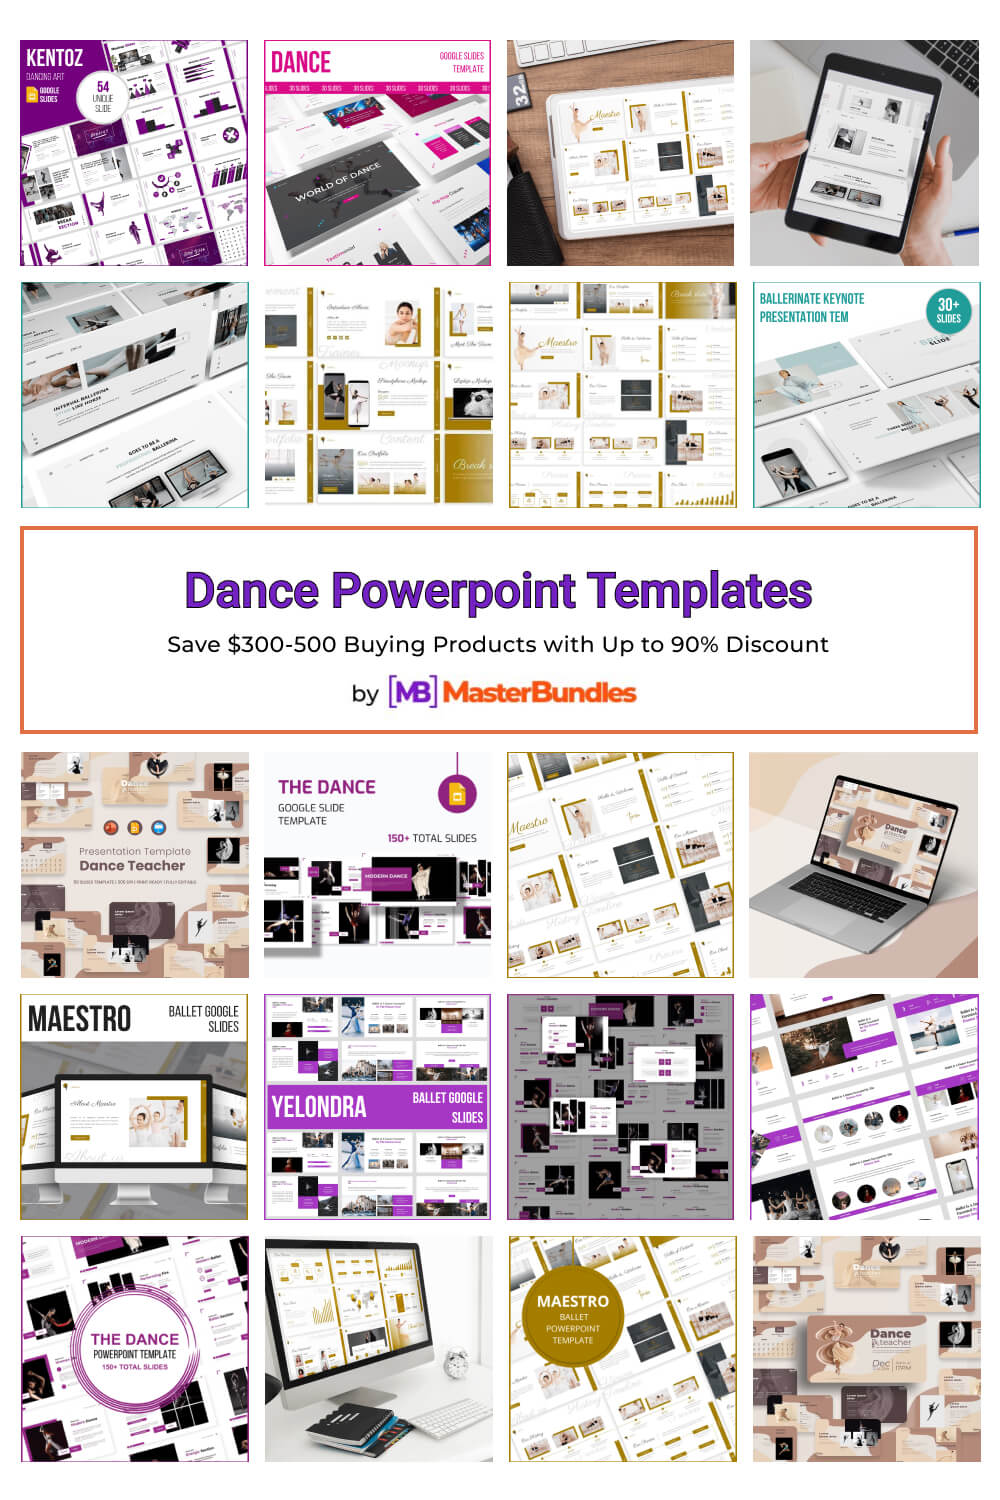 dance powerpoint templates pinterest image.